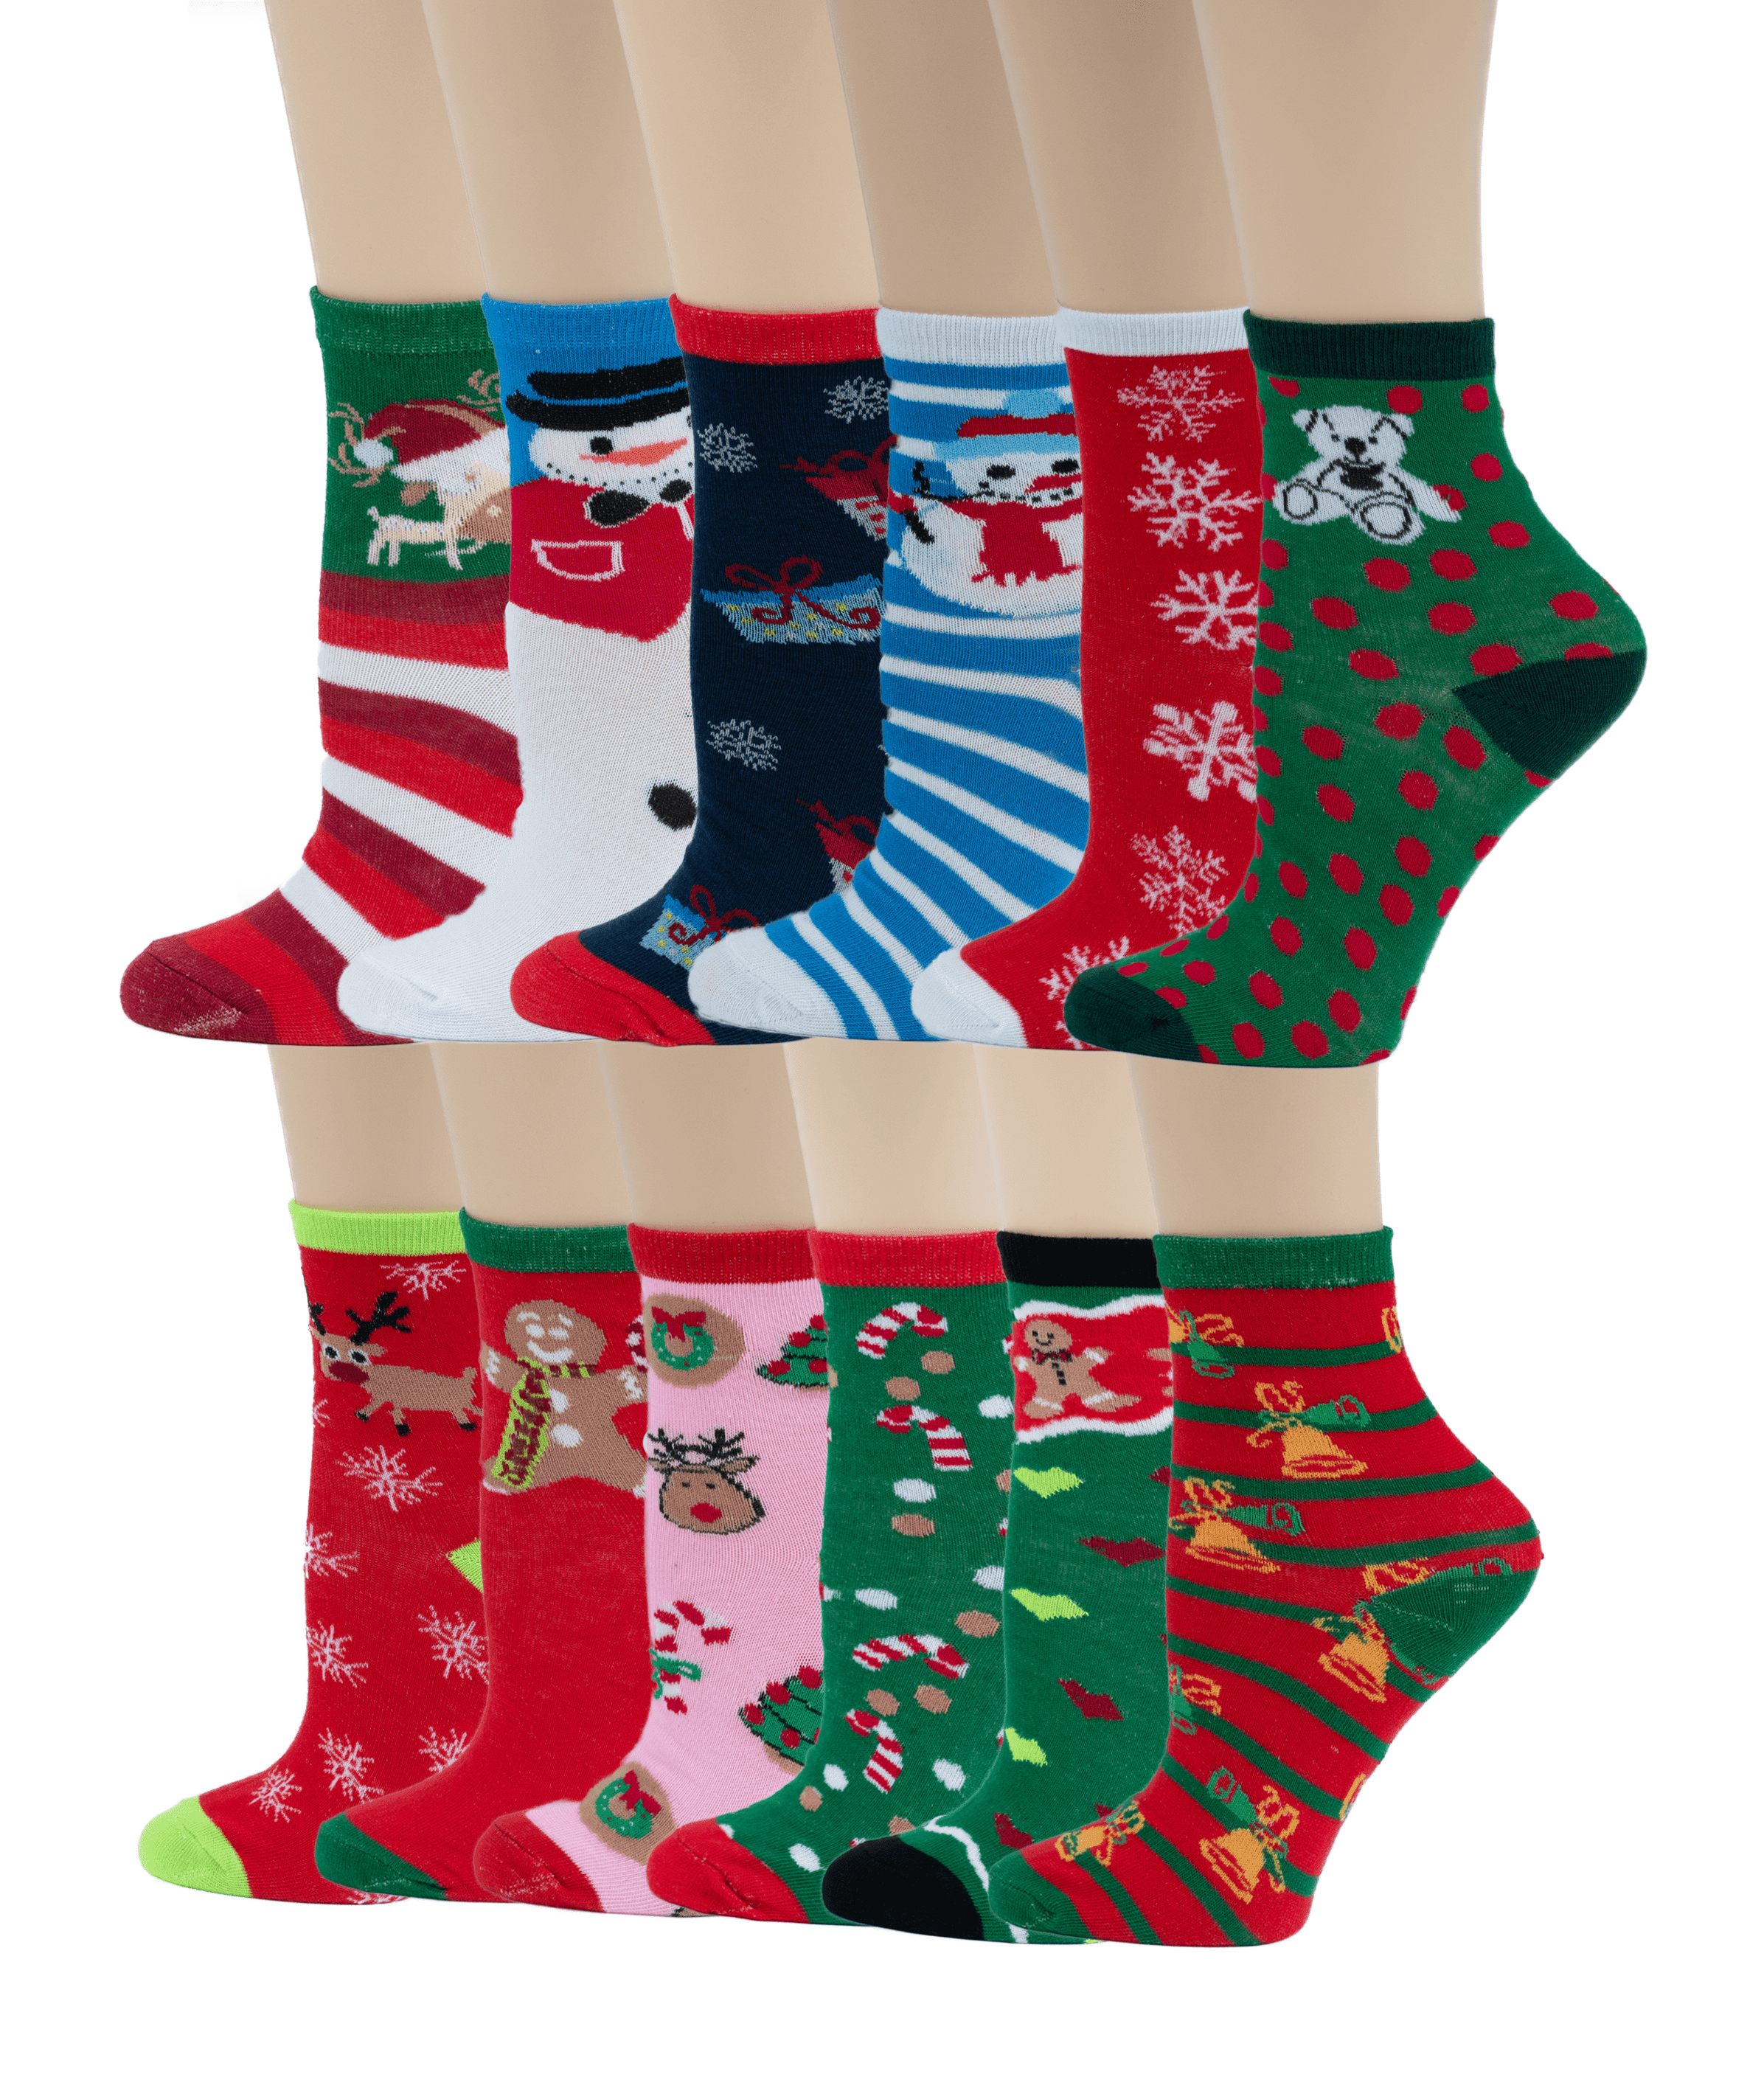 Foaincore 24 Pairs Kids Christmas Socks Colorful Creative Holiday Crew Socks Children Cute Socks Christmas Gift for Boy Girl